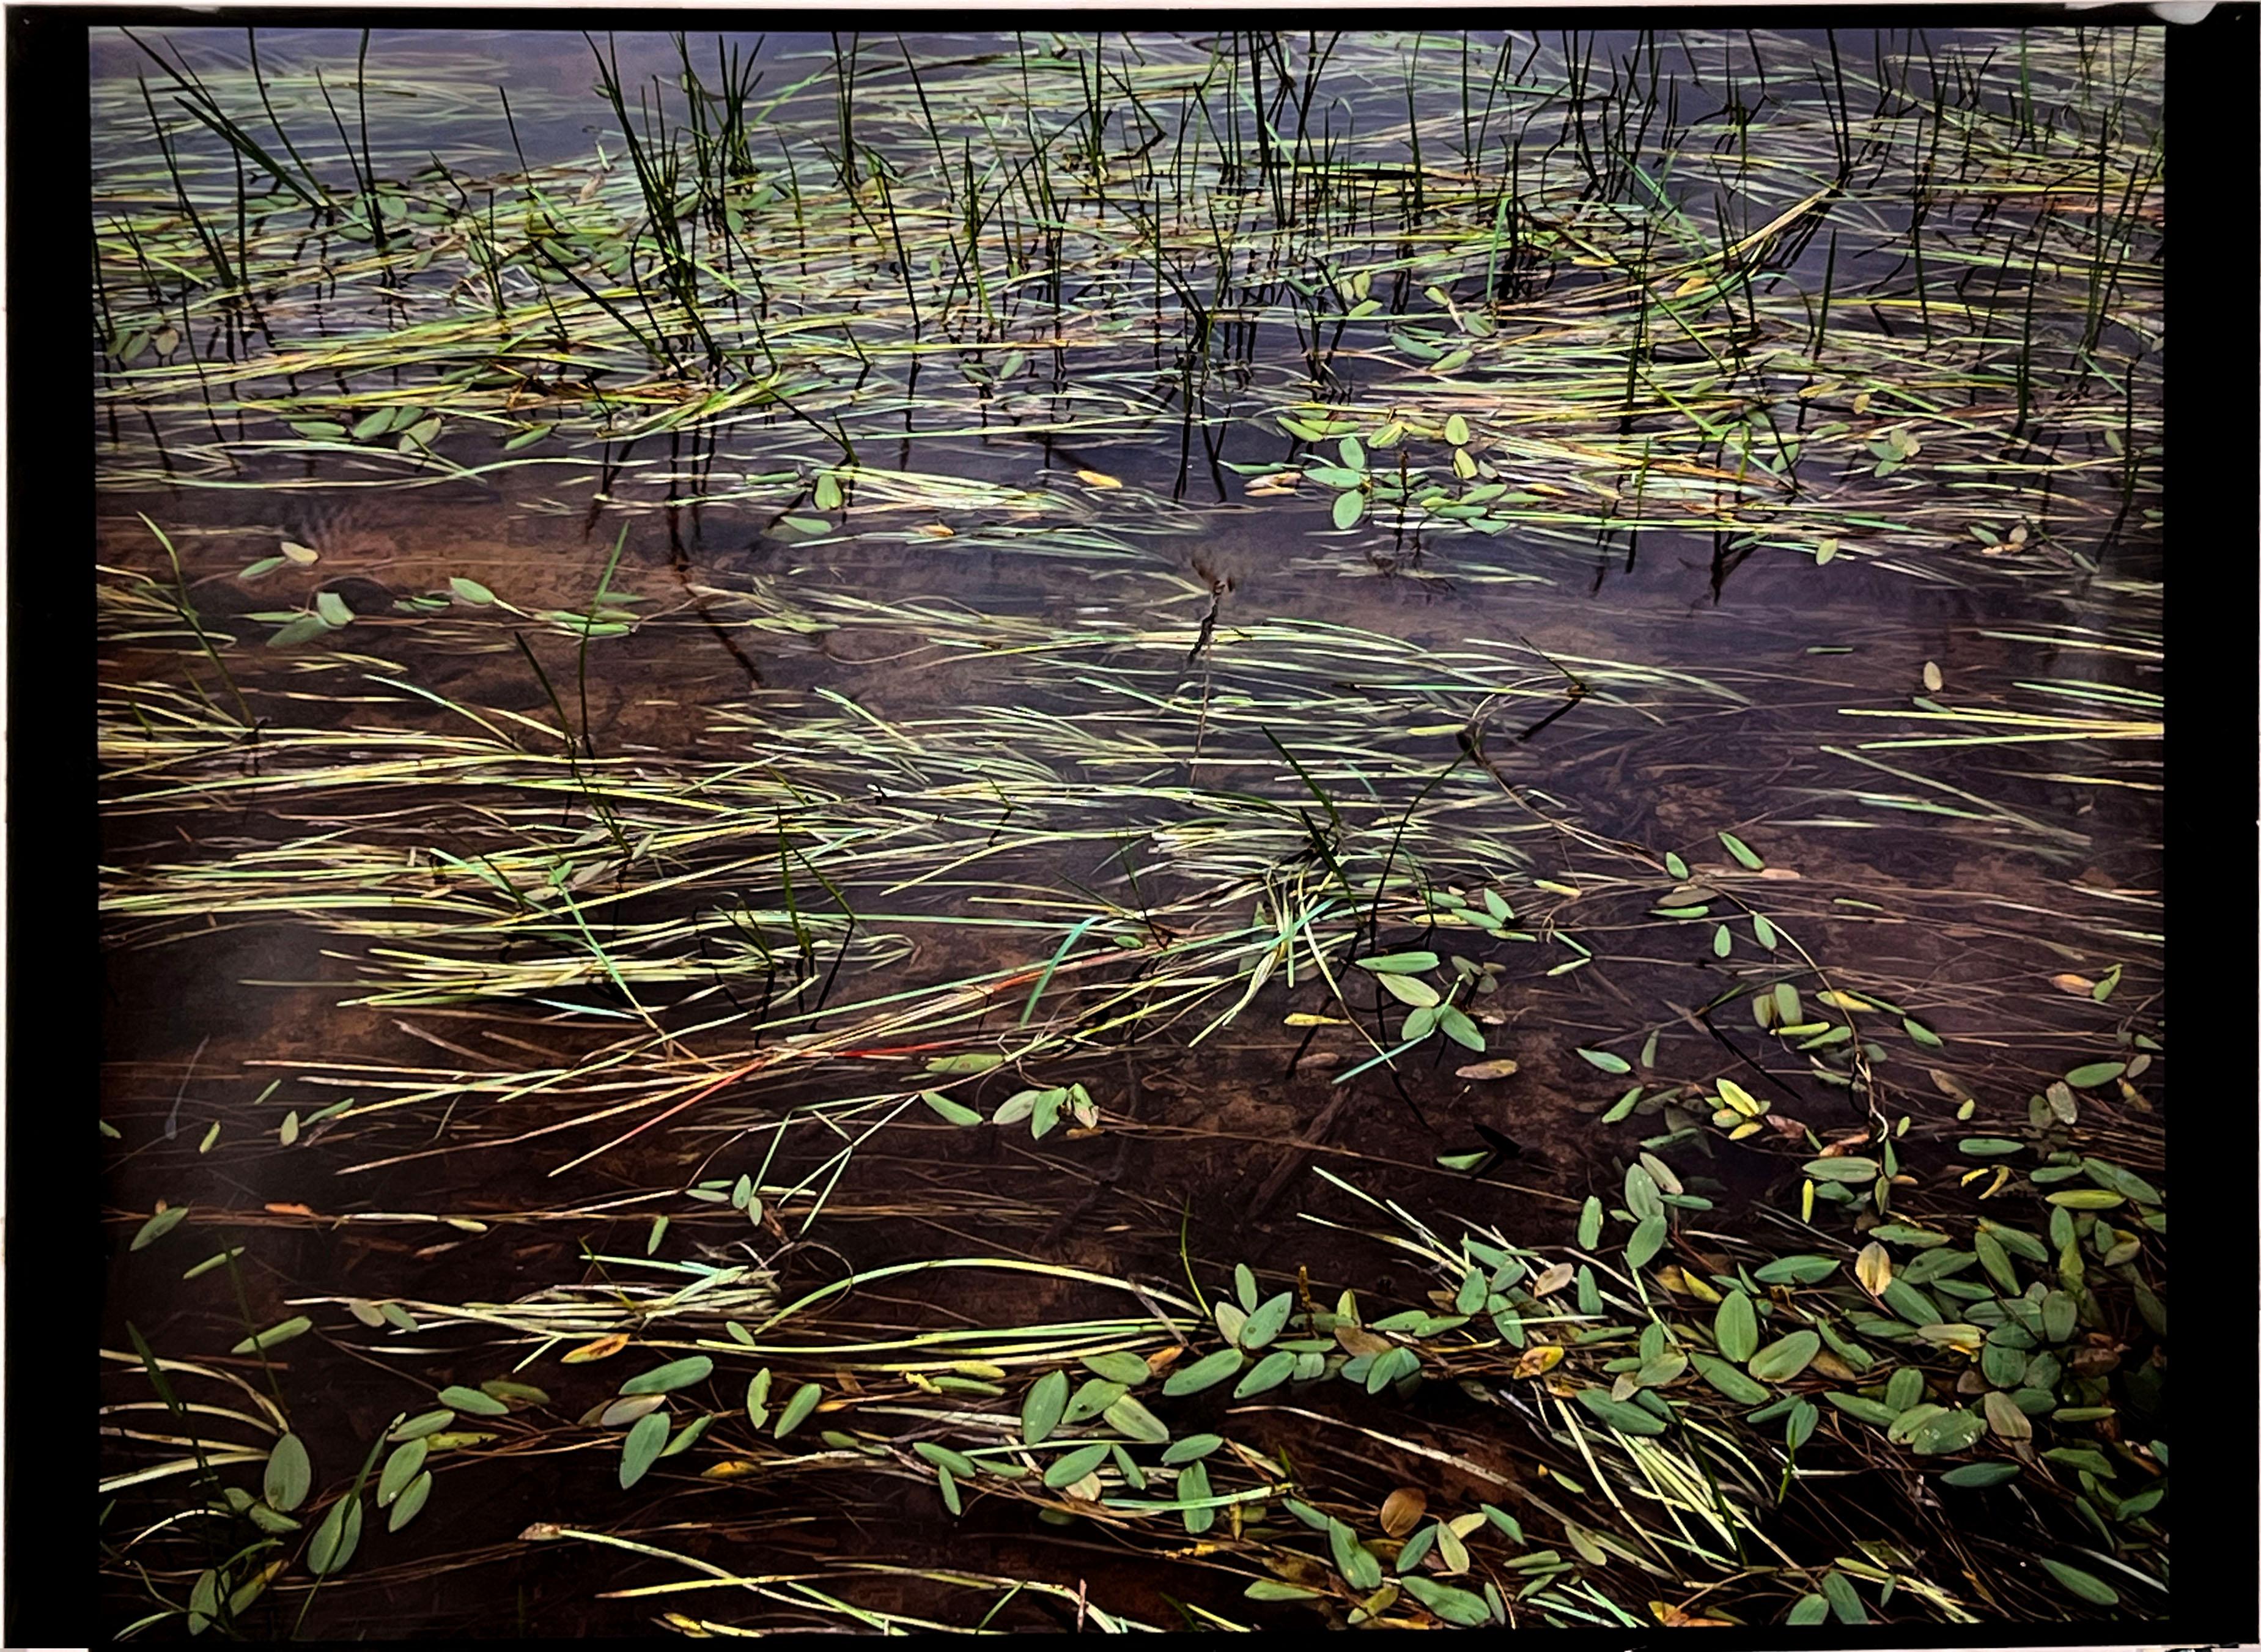 St. Regis River Grasses, New York, a large Cibachrome Direct Positive Photograph - 8